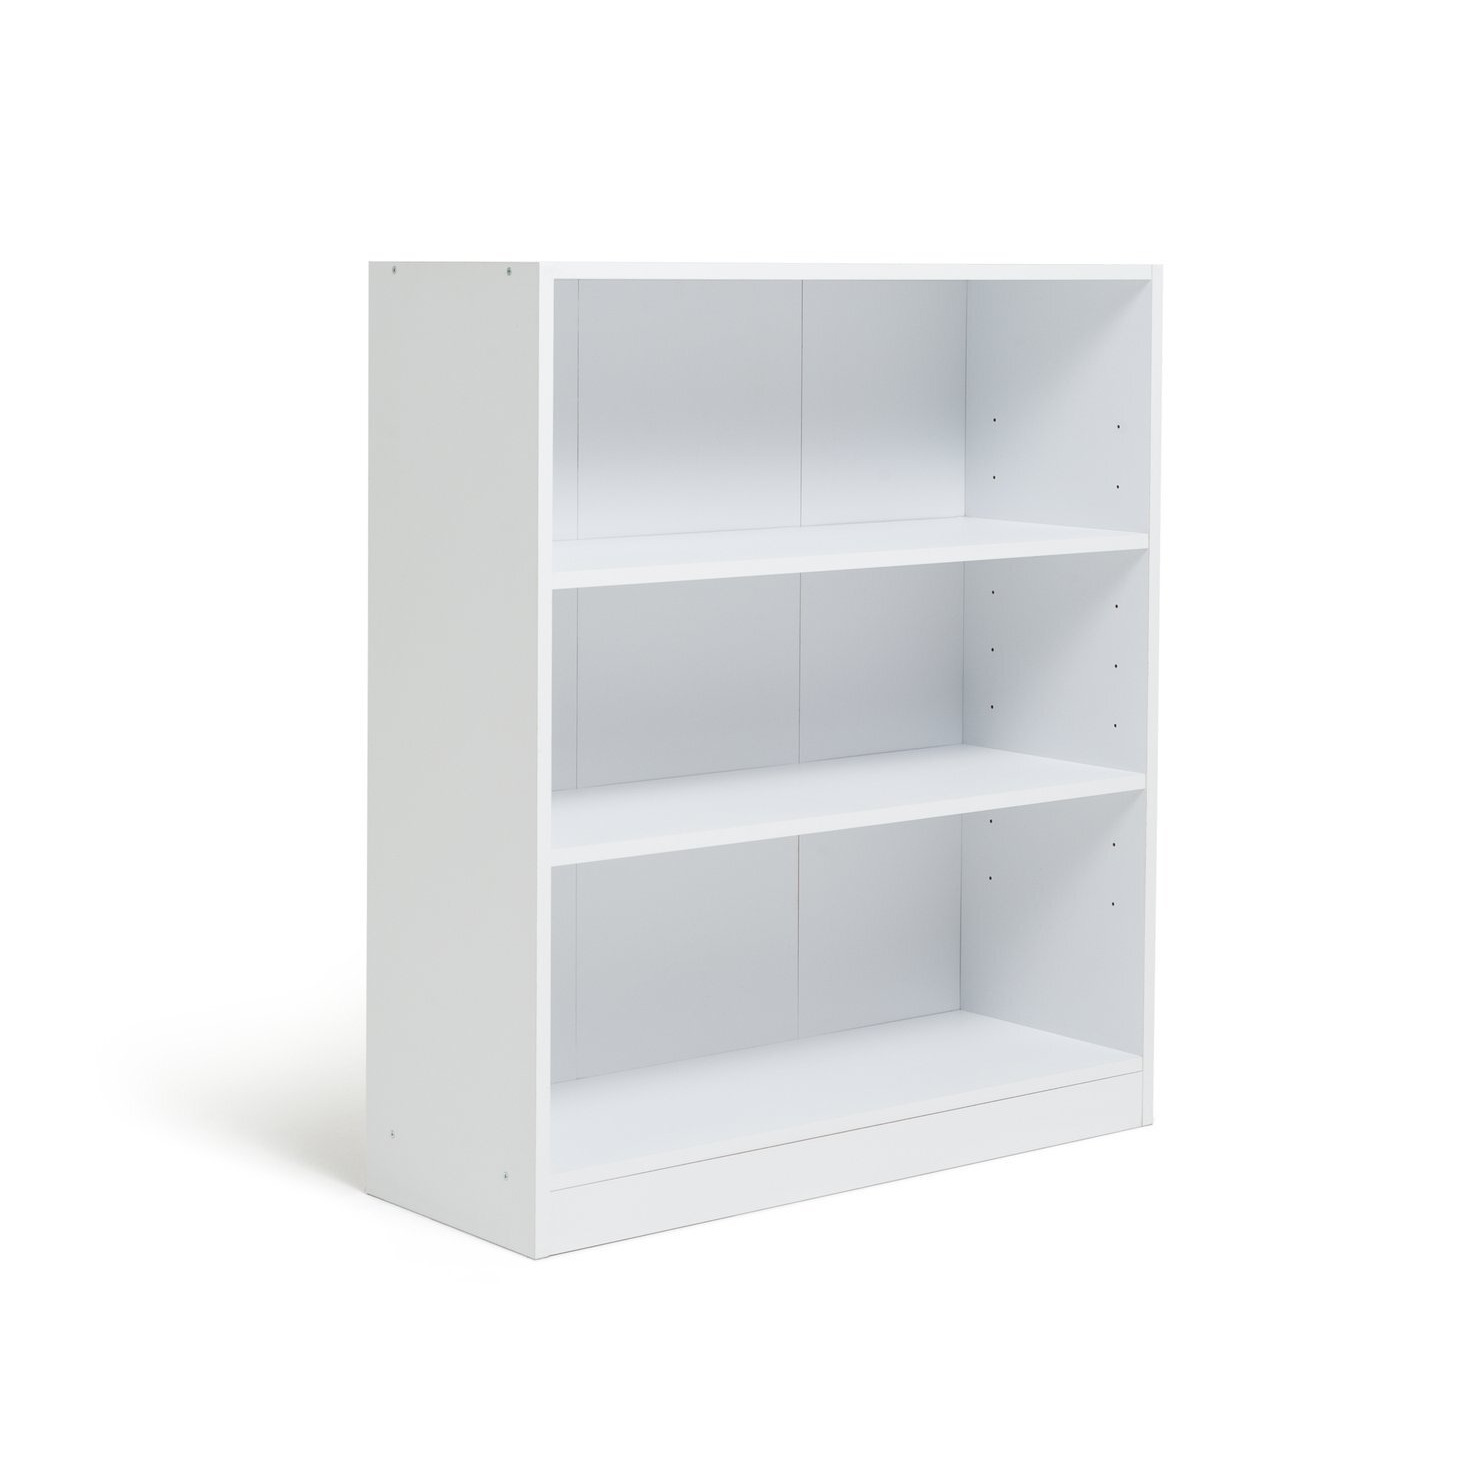 Argos Home Maine Short Bookcase - White - image 1